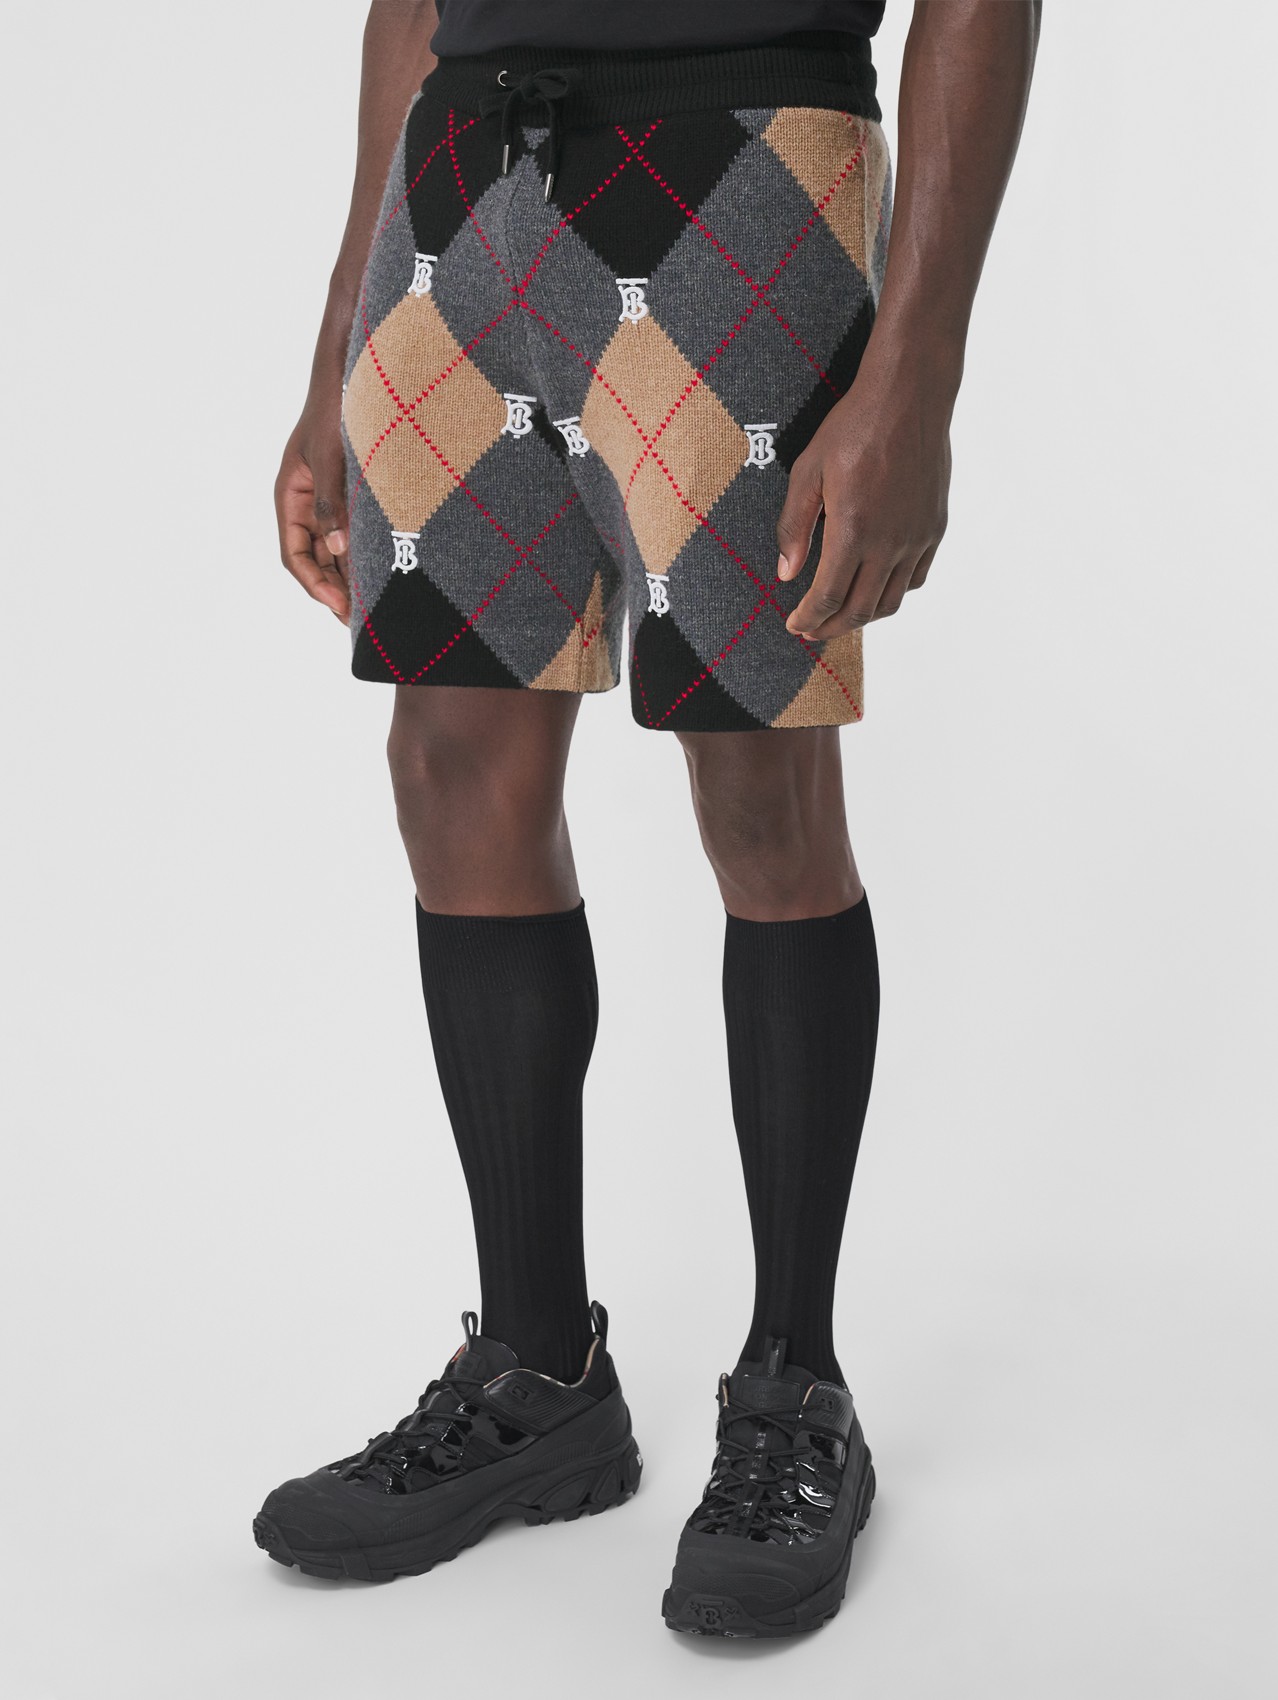 Pantaloncini in lana e cashmere con motivo Argyle a intarsio e monogramma (Cammello)